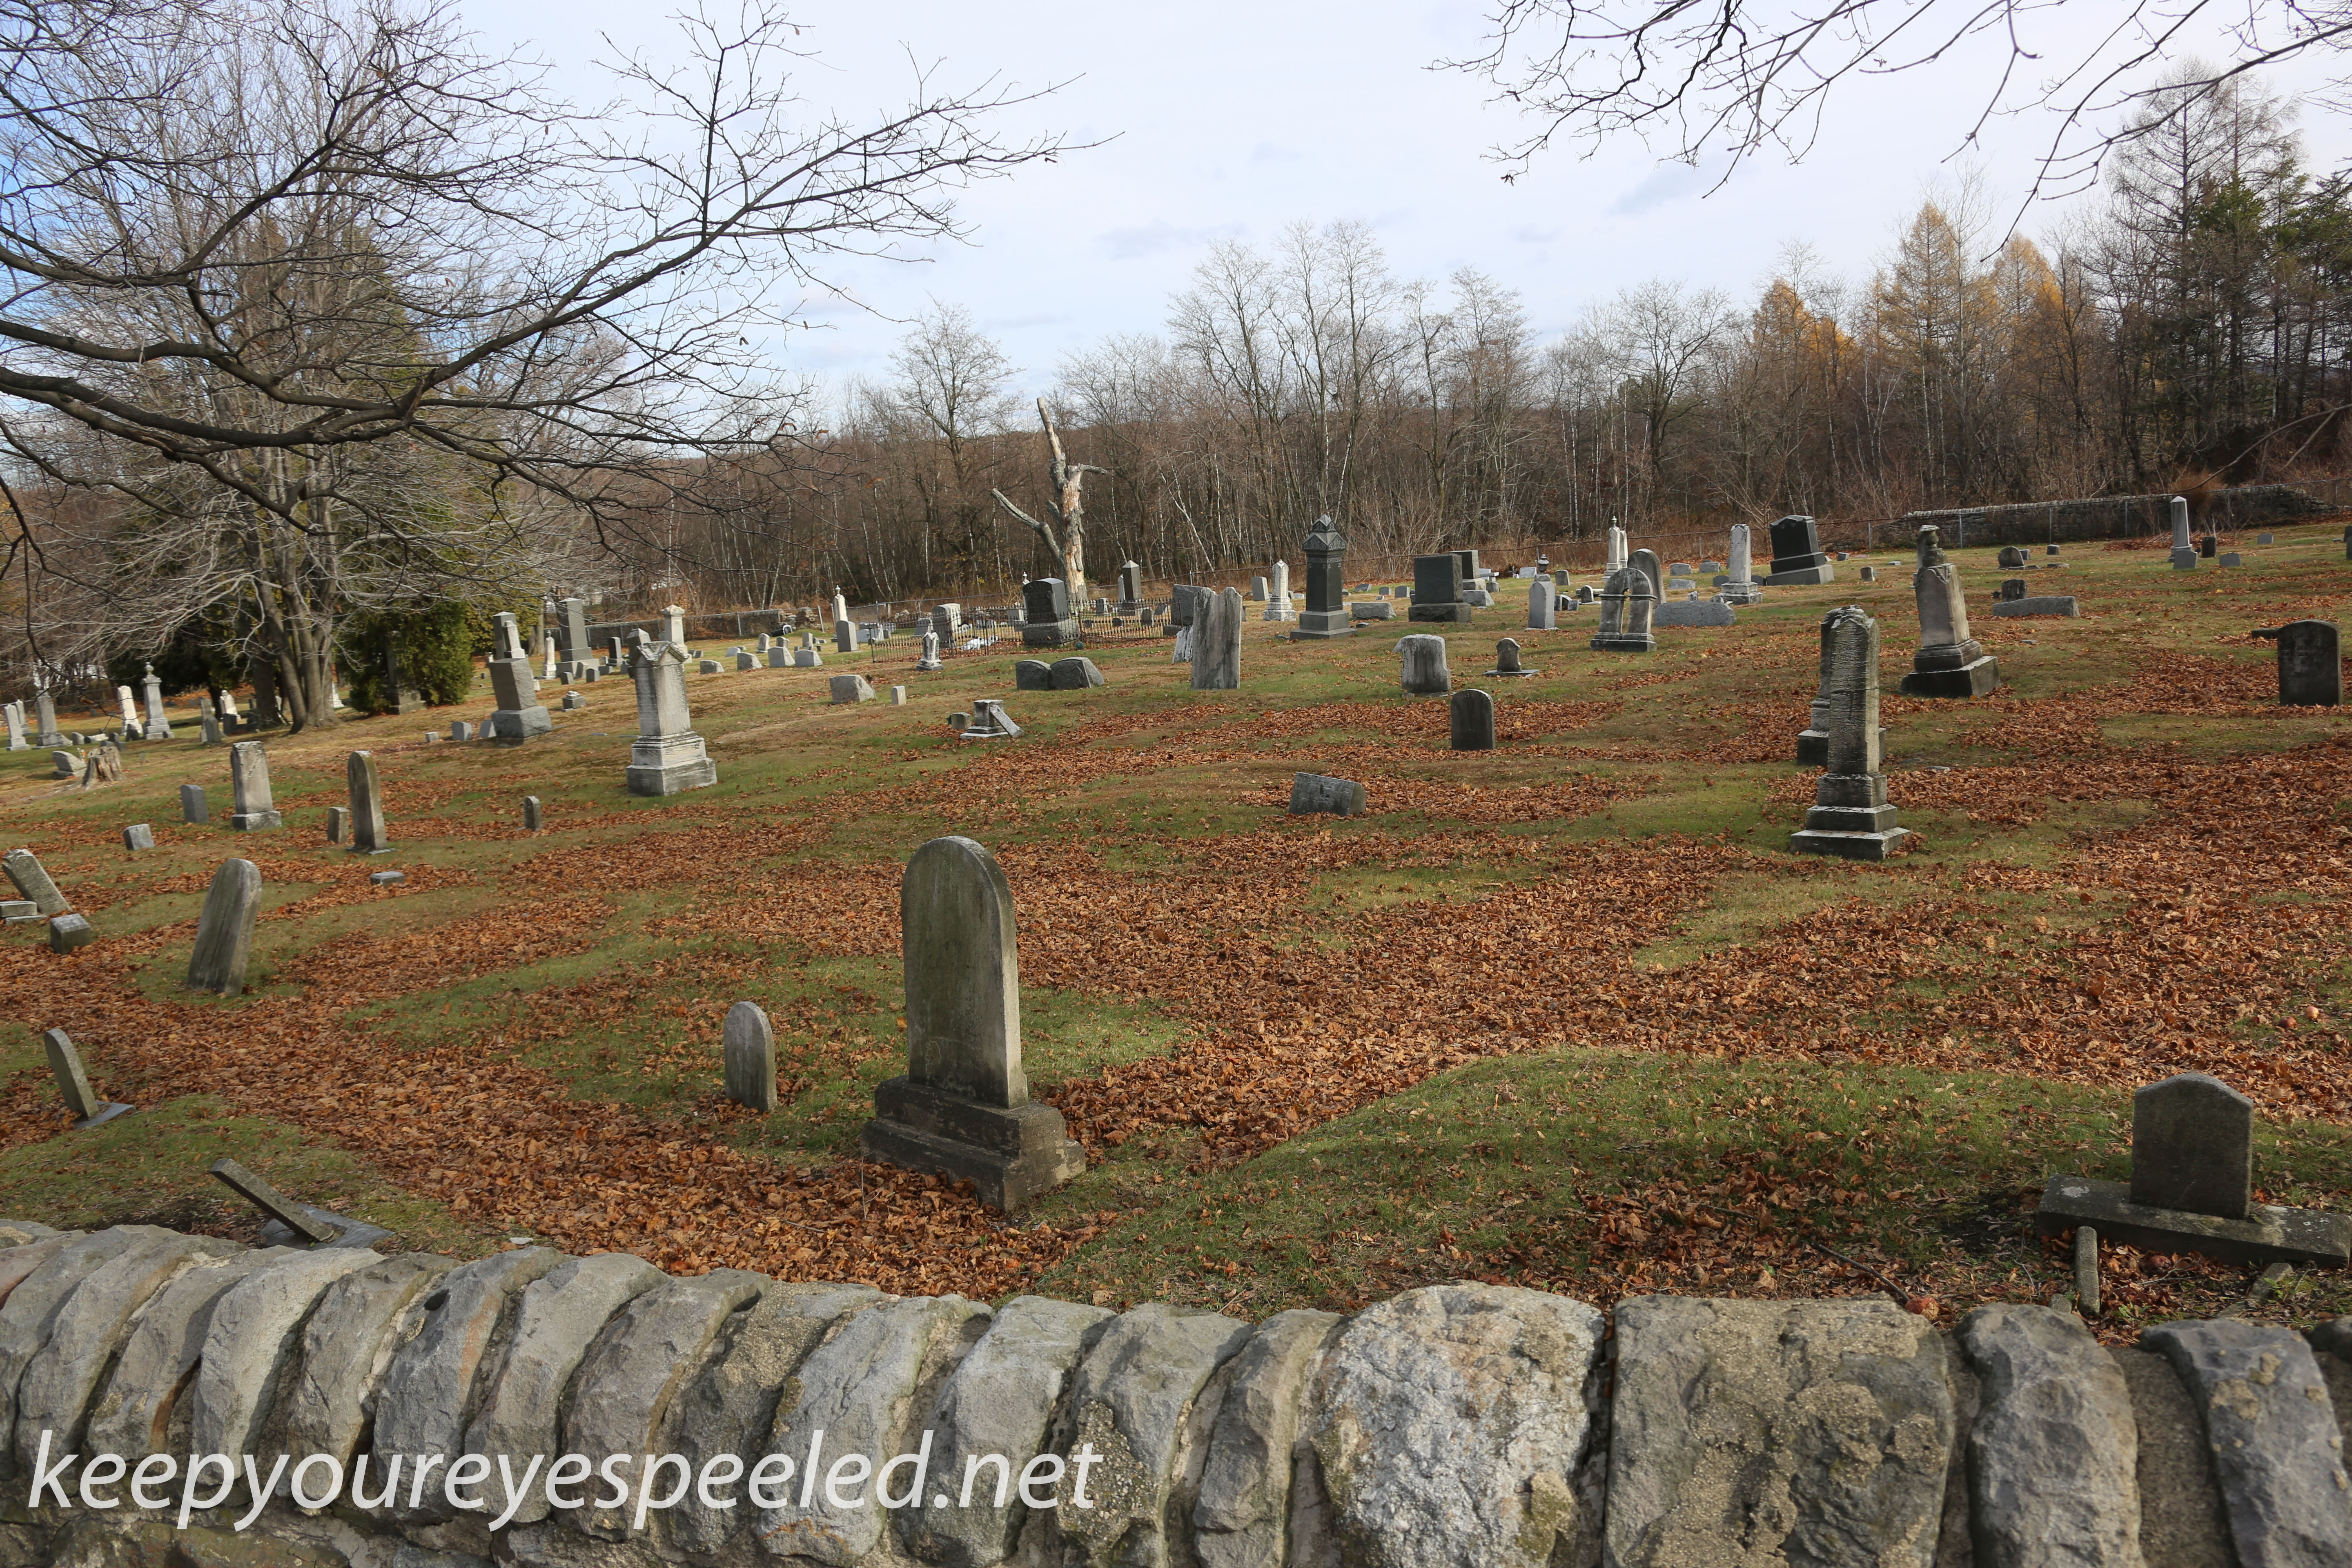 McAdoo-Tresckow hike  jeanesvill cemetery  (2 of 16)